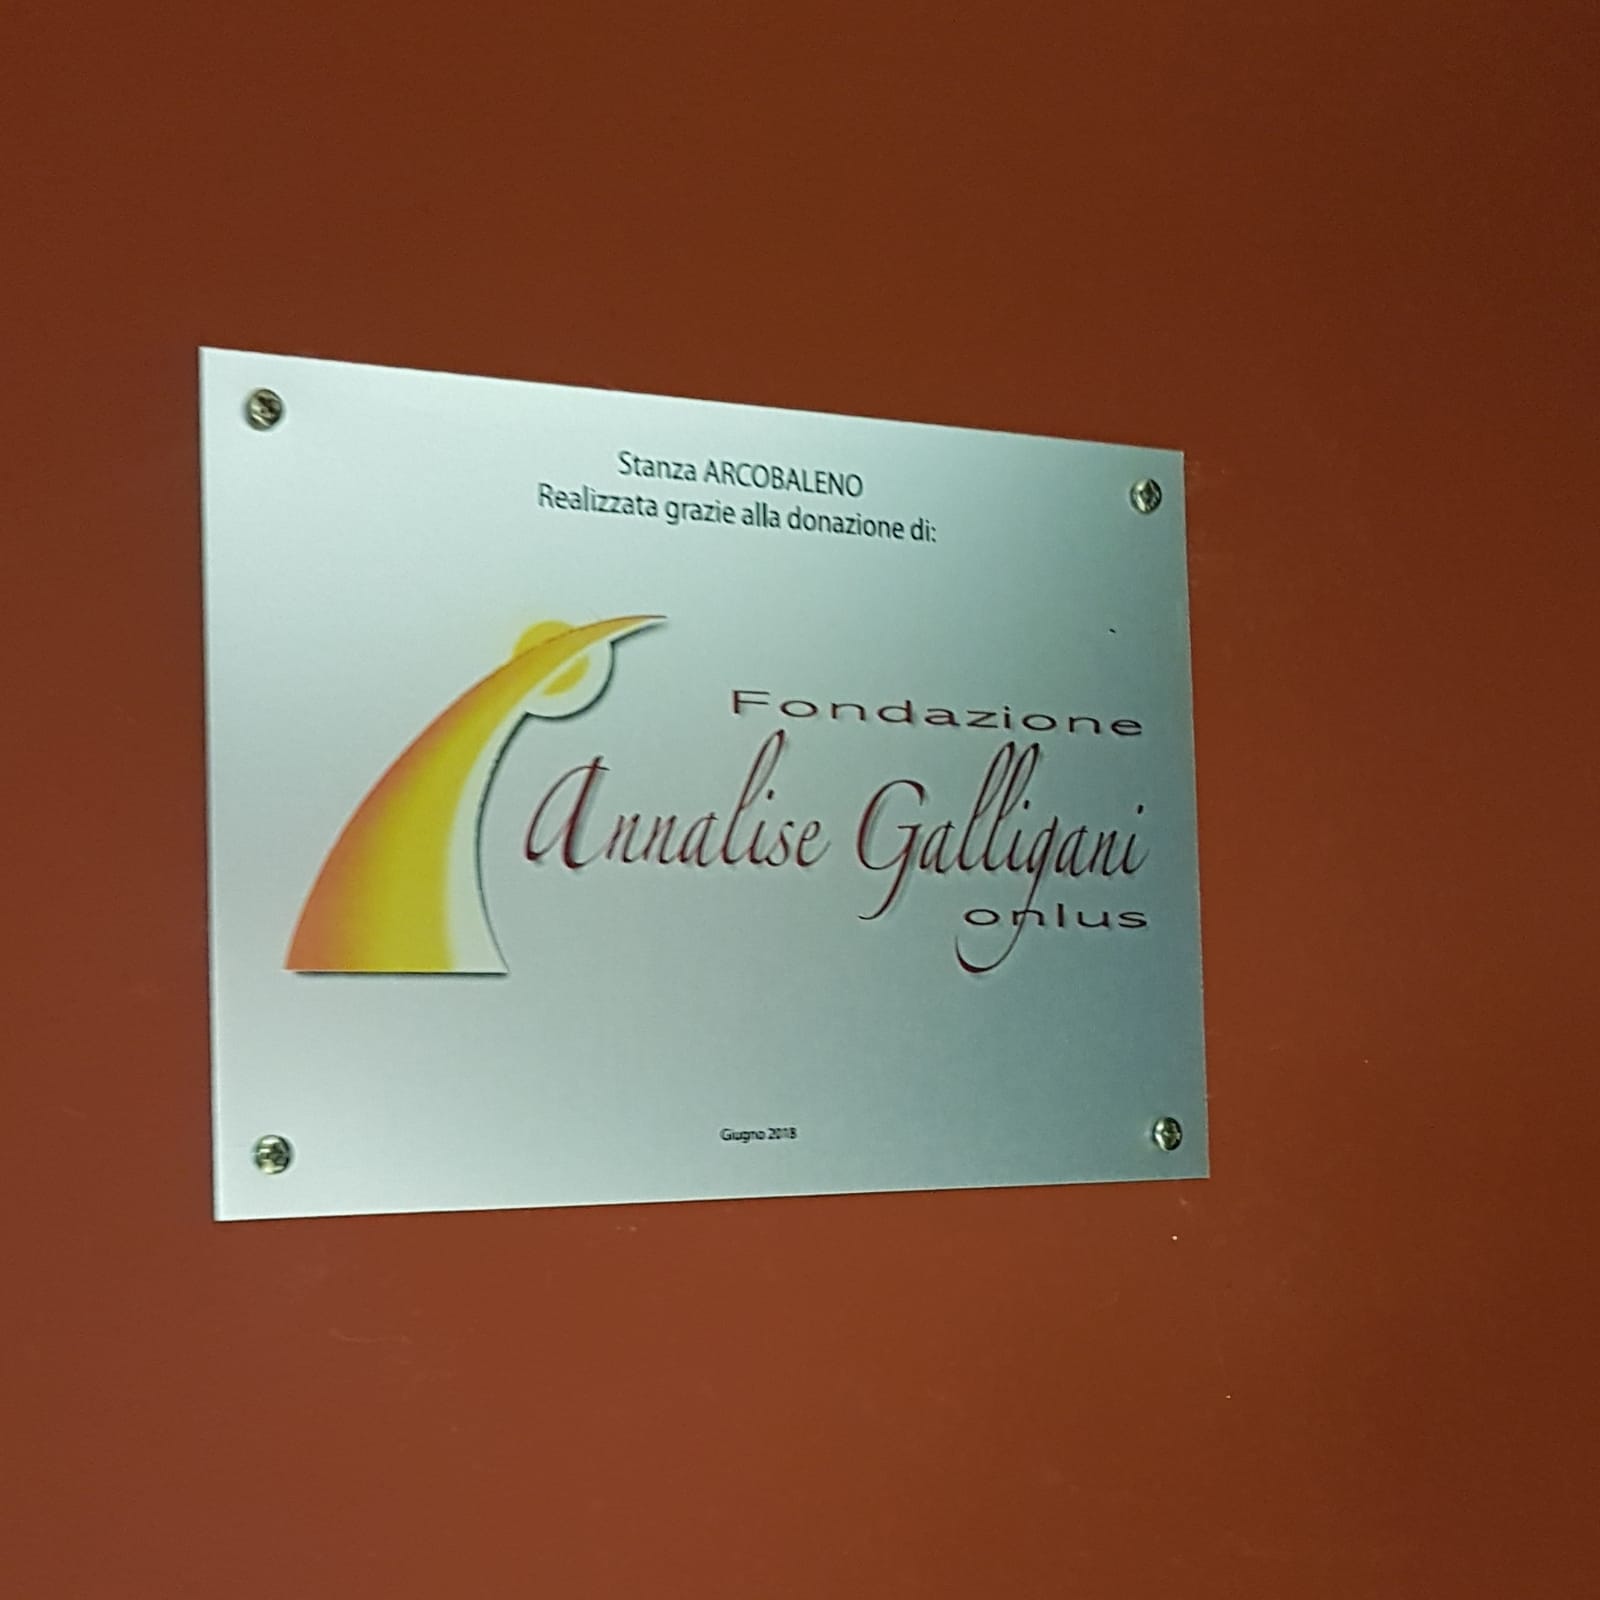 Fondazione Annalise Galligani Onlus